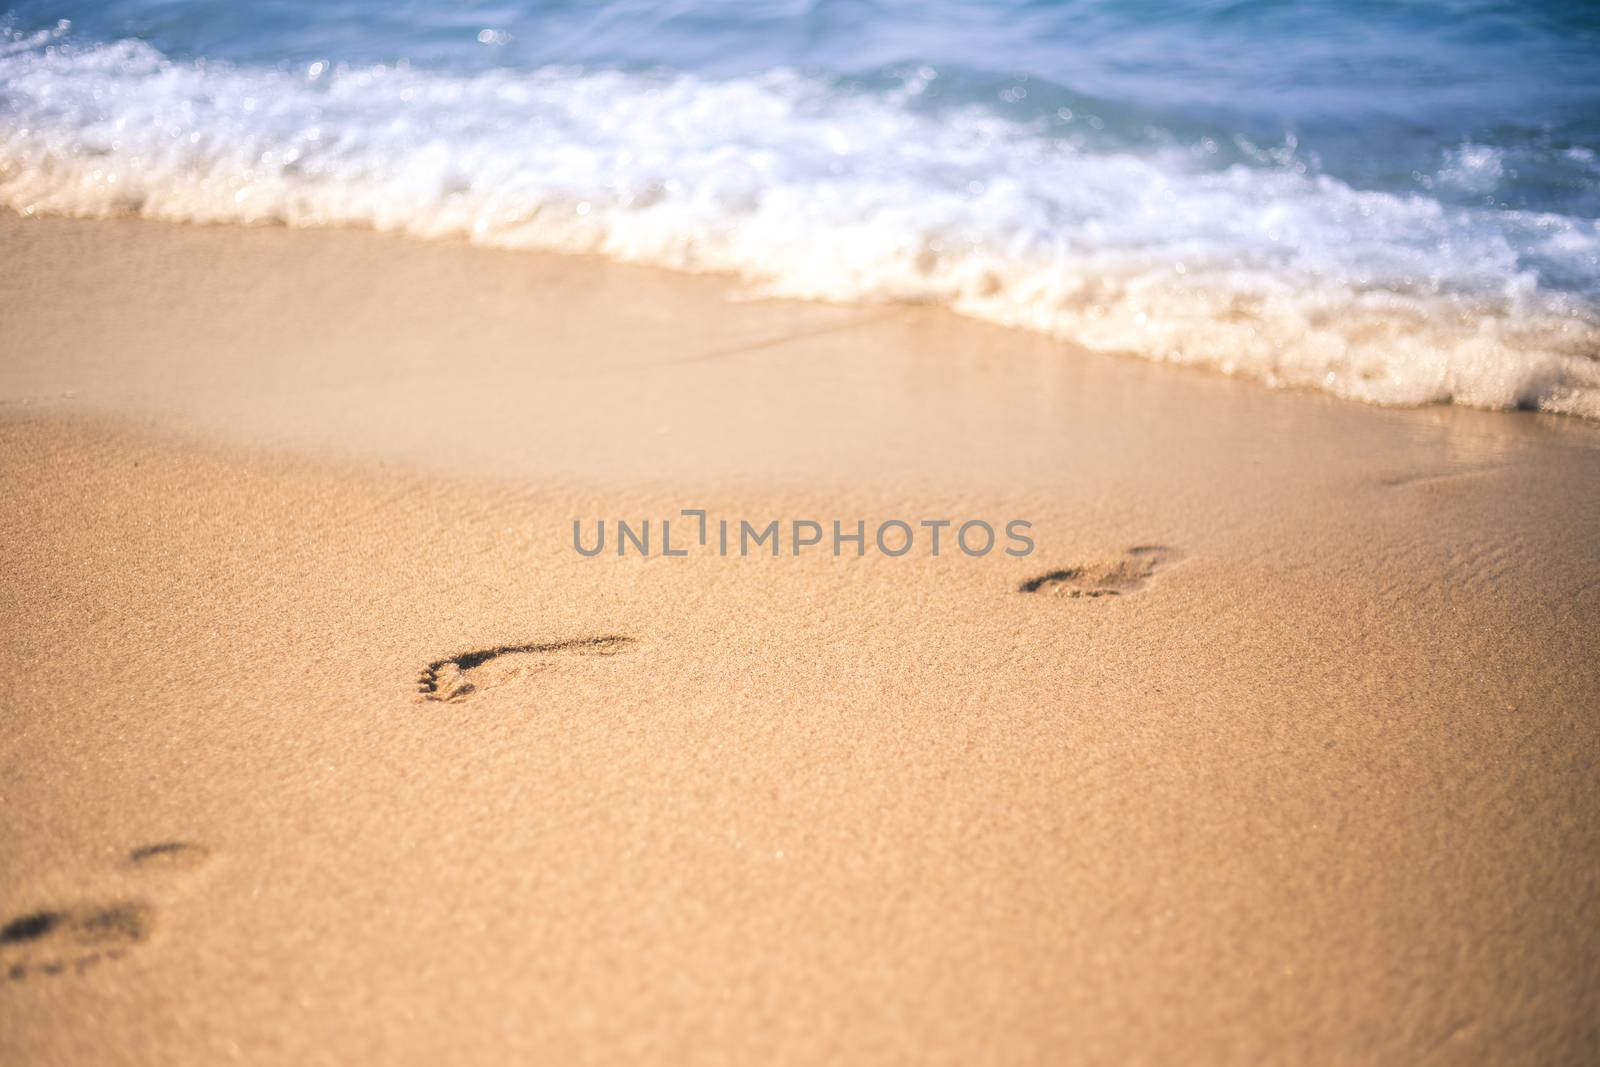 Footprint in a beach sand from sea in a summer.